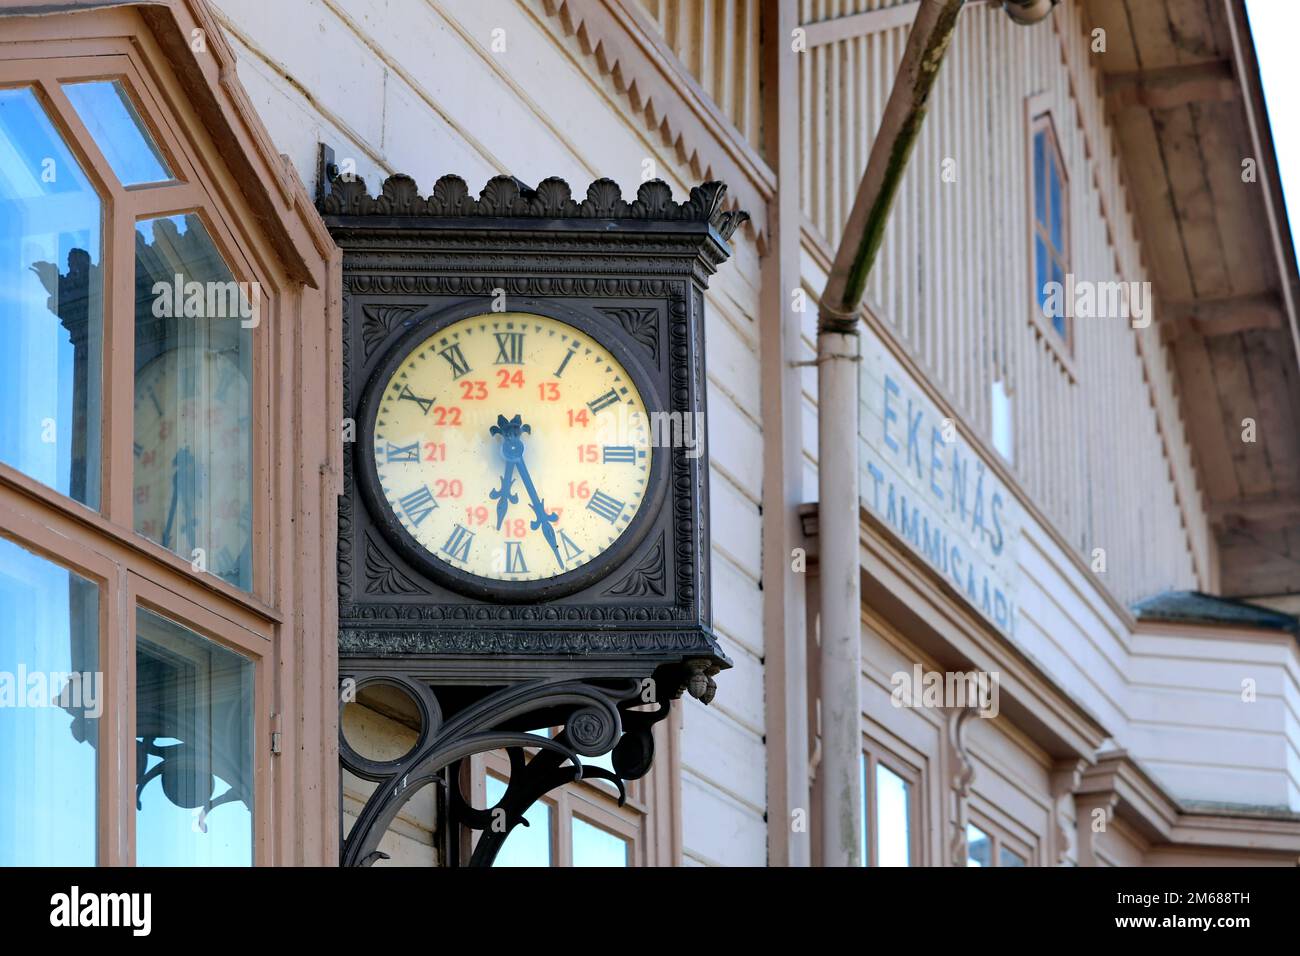 Old, nostalgic outdoor wall clock at Tammisaari - Ekenäs railway station in South of Finland. Stock Photo